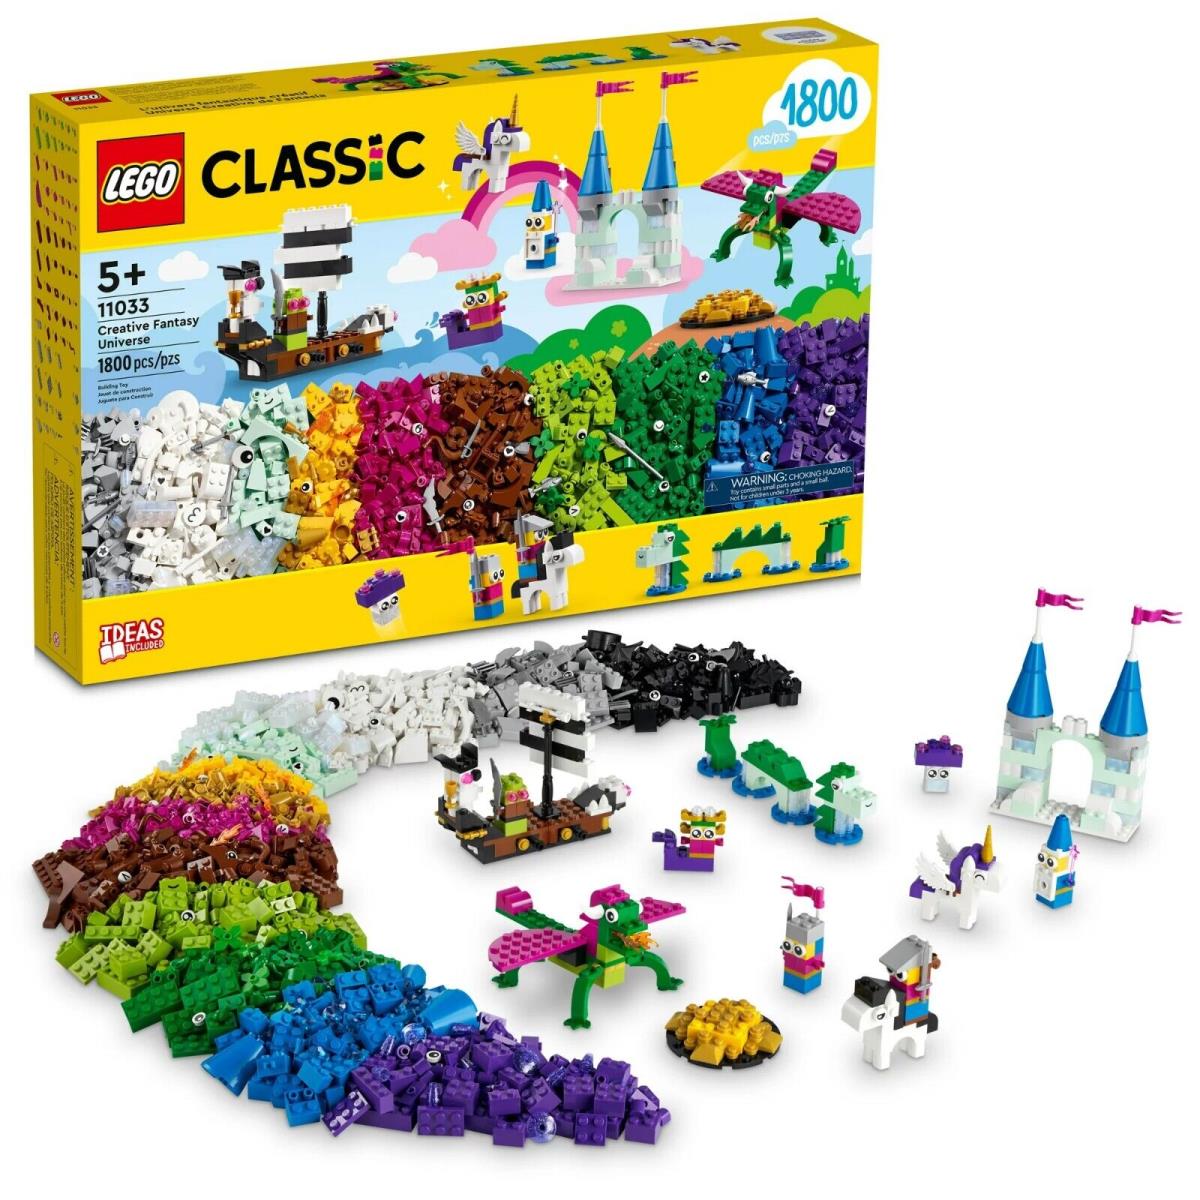 Lego Classic 11033 Creative Fantasy Universe Building Toy Playset 1800 Pcs